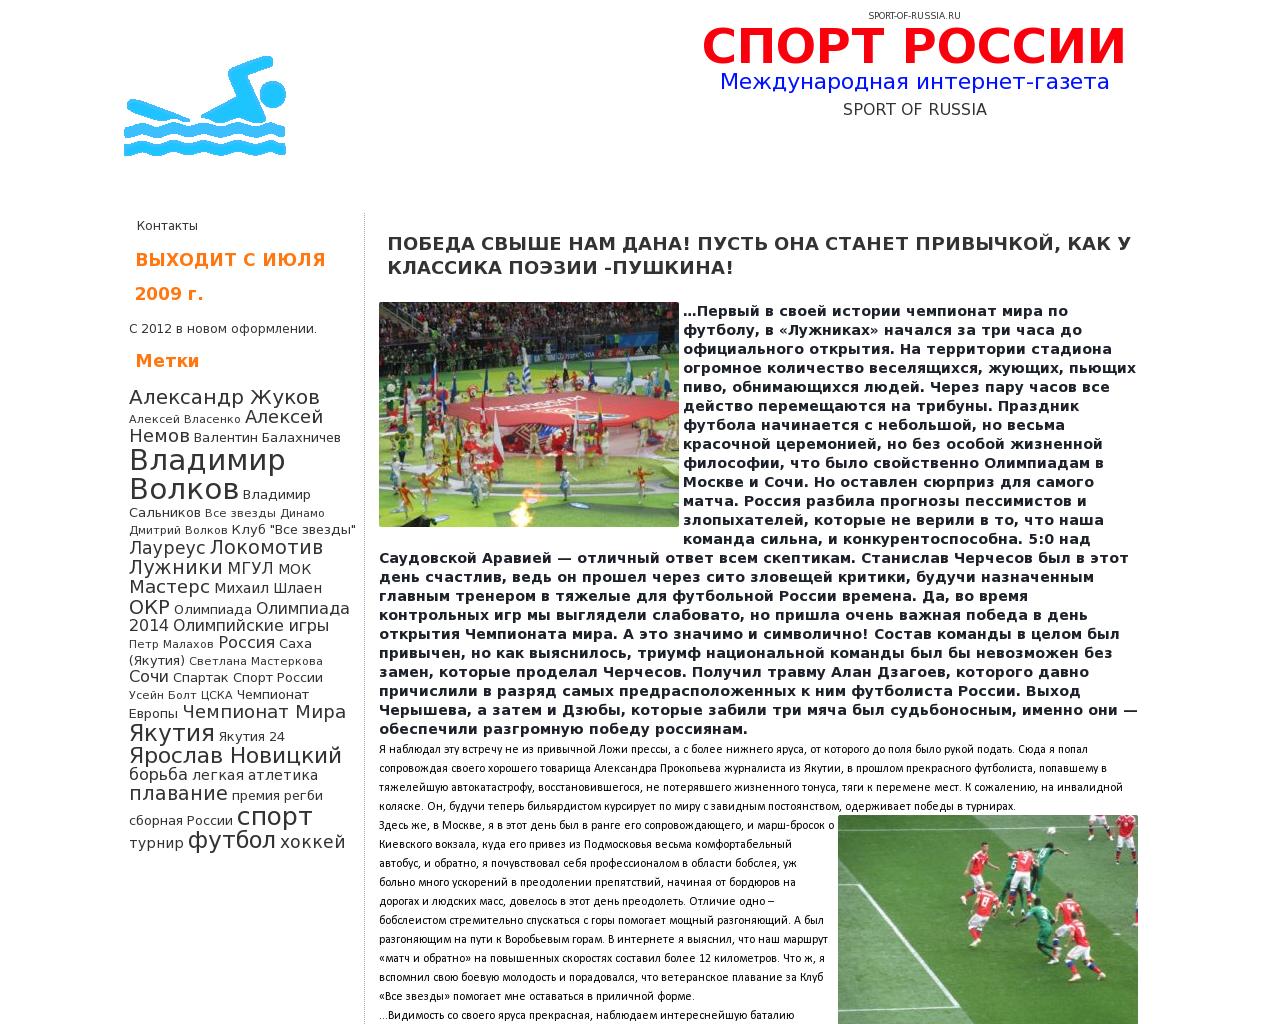 Изображение сайта sport-of-russia.ru в разрешении 1280x1024